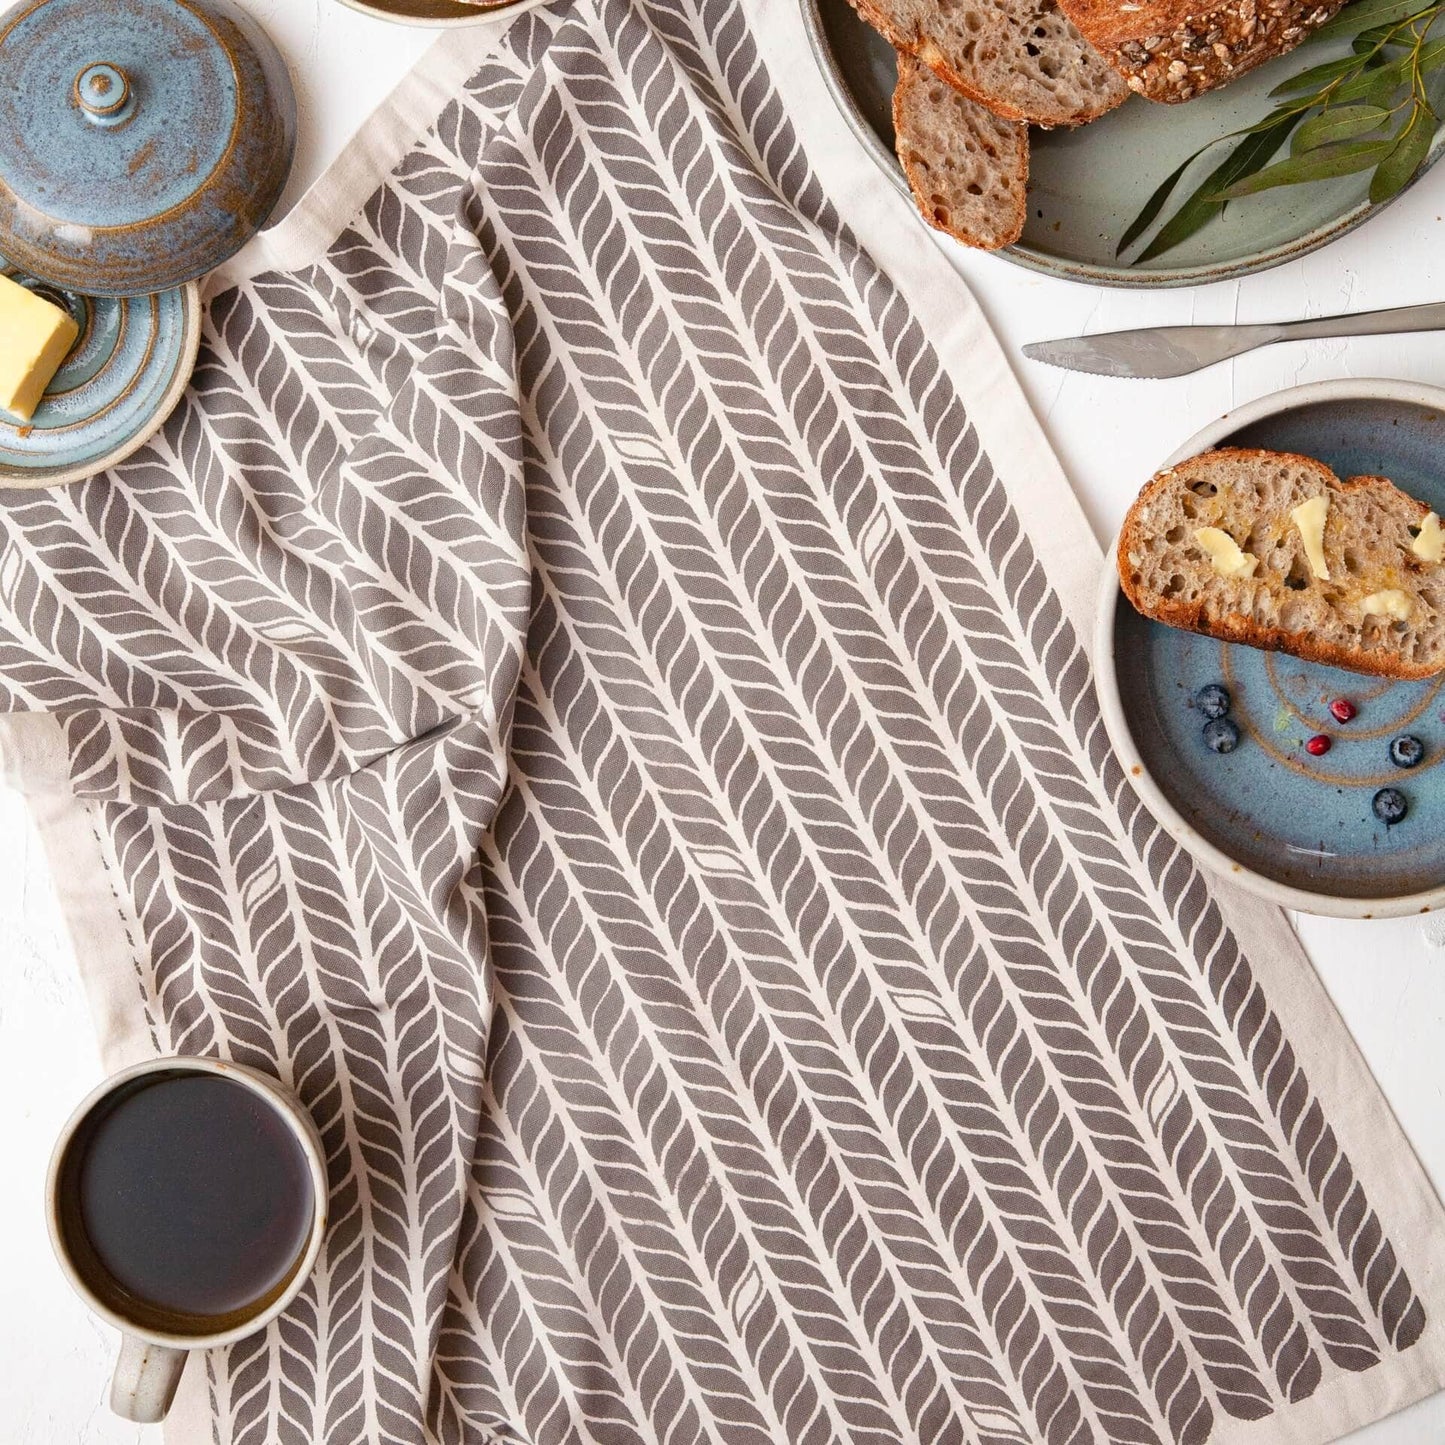 Prints By Nature Tea Towel Pebble Organic Cotton Tea Towel in 'Wheat' Print